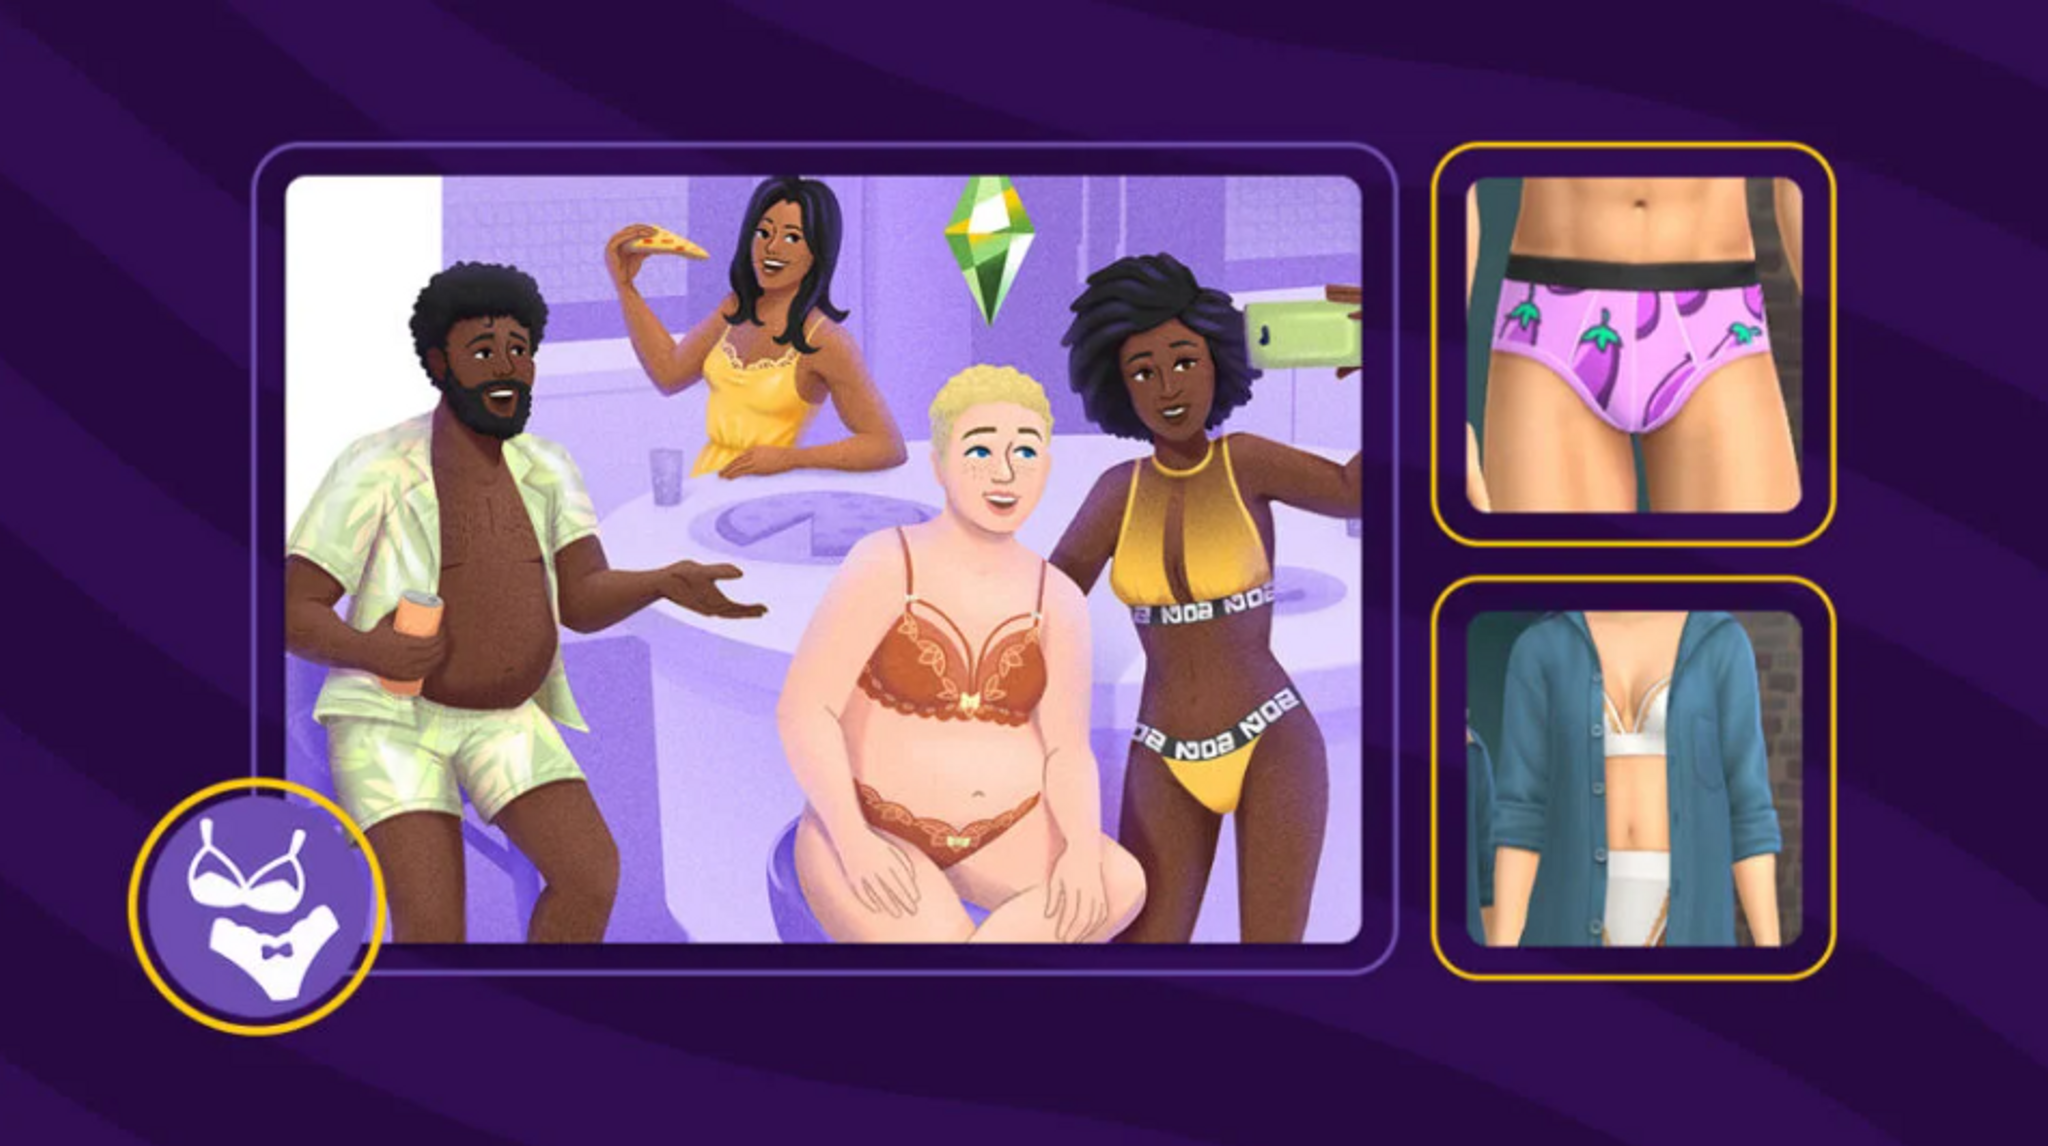 The Sims x MeUndies celebrates body positivity in gaming